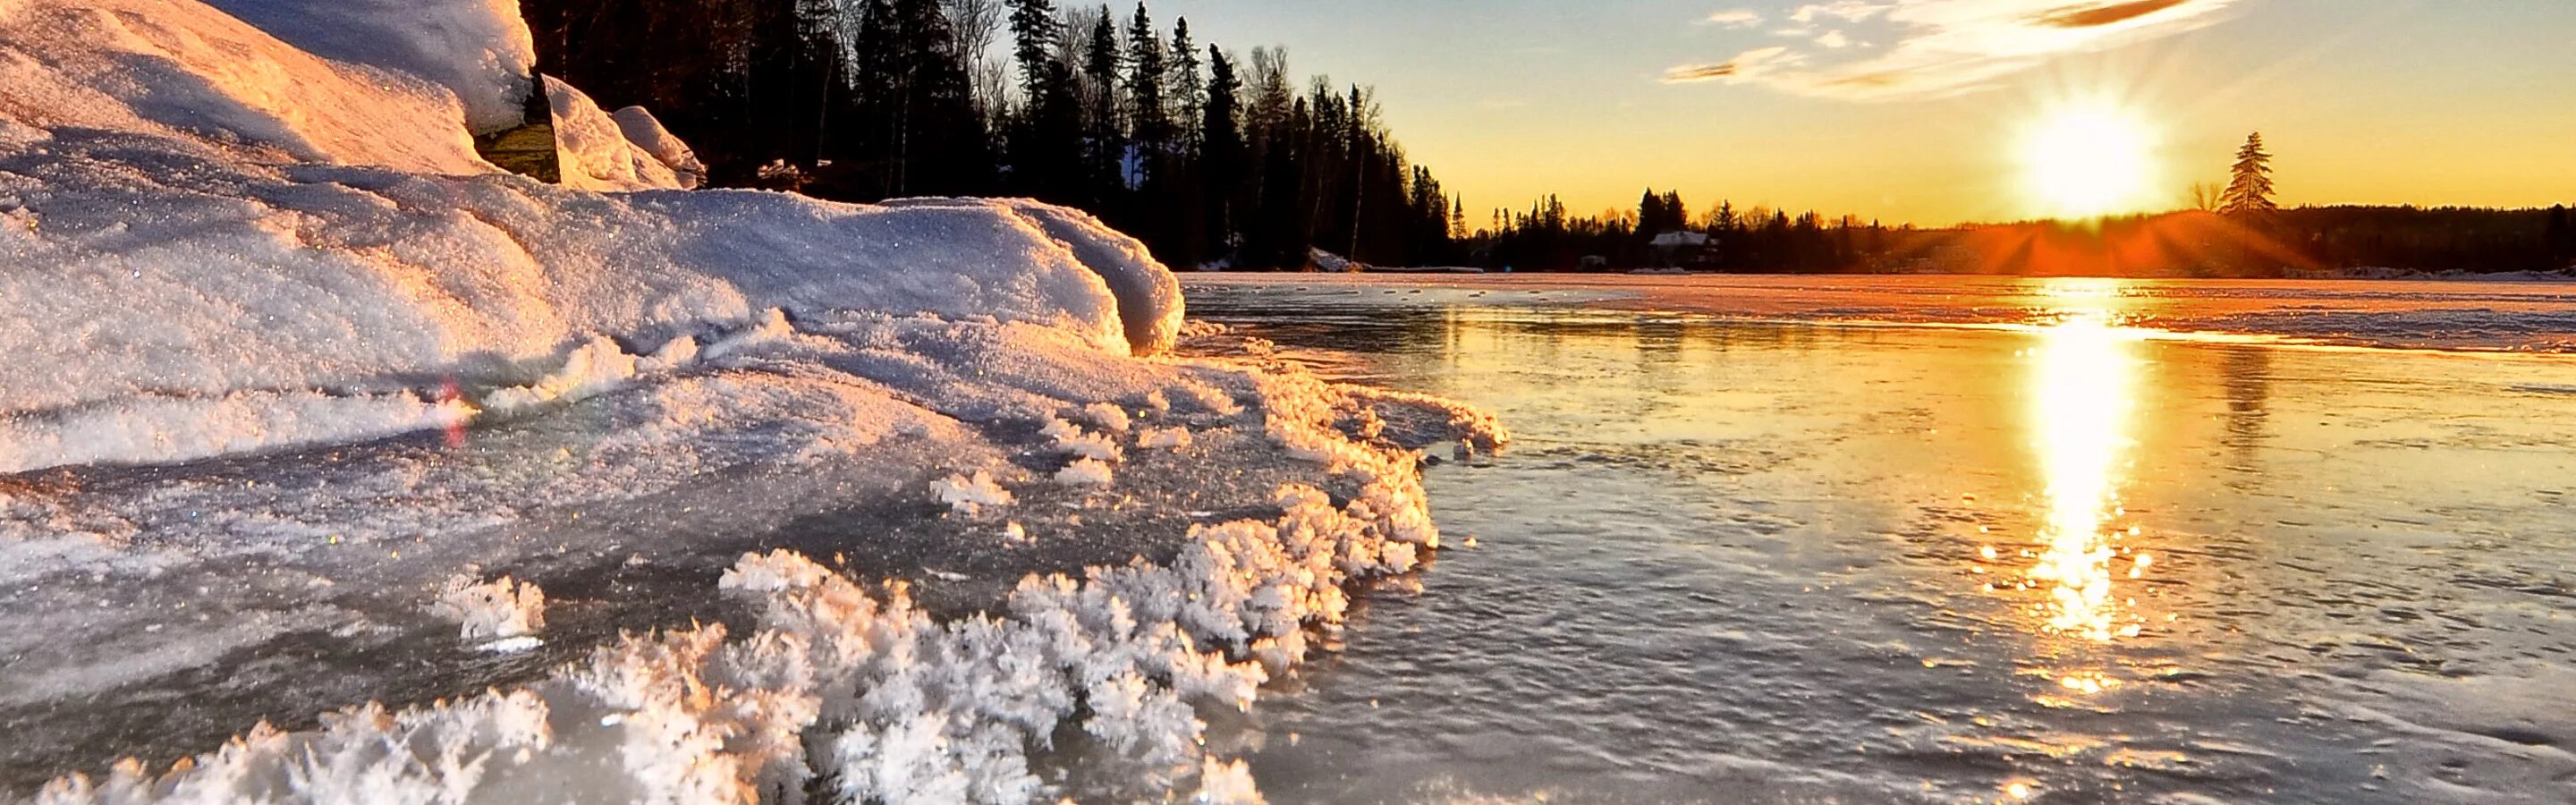 Снег на солнце на озере. Лед блестит. Озеро снег огонь Relax.